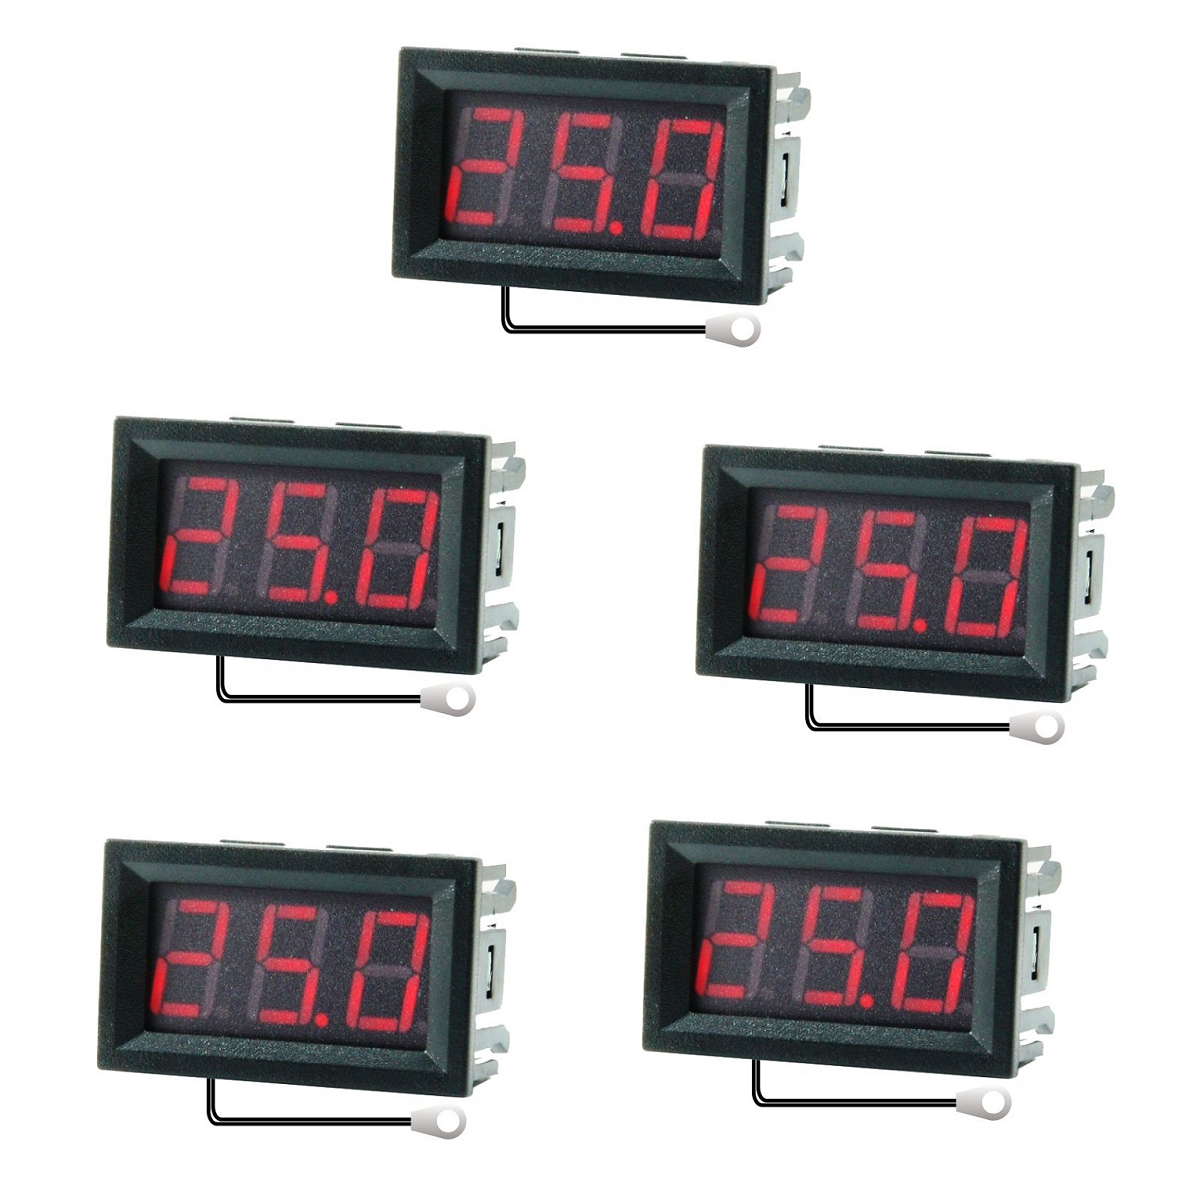 5Pcs 0.56 Inch Mini Digital LCD Indoor Convenient Temperature Sensor Meter Monitor Thermometer with 